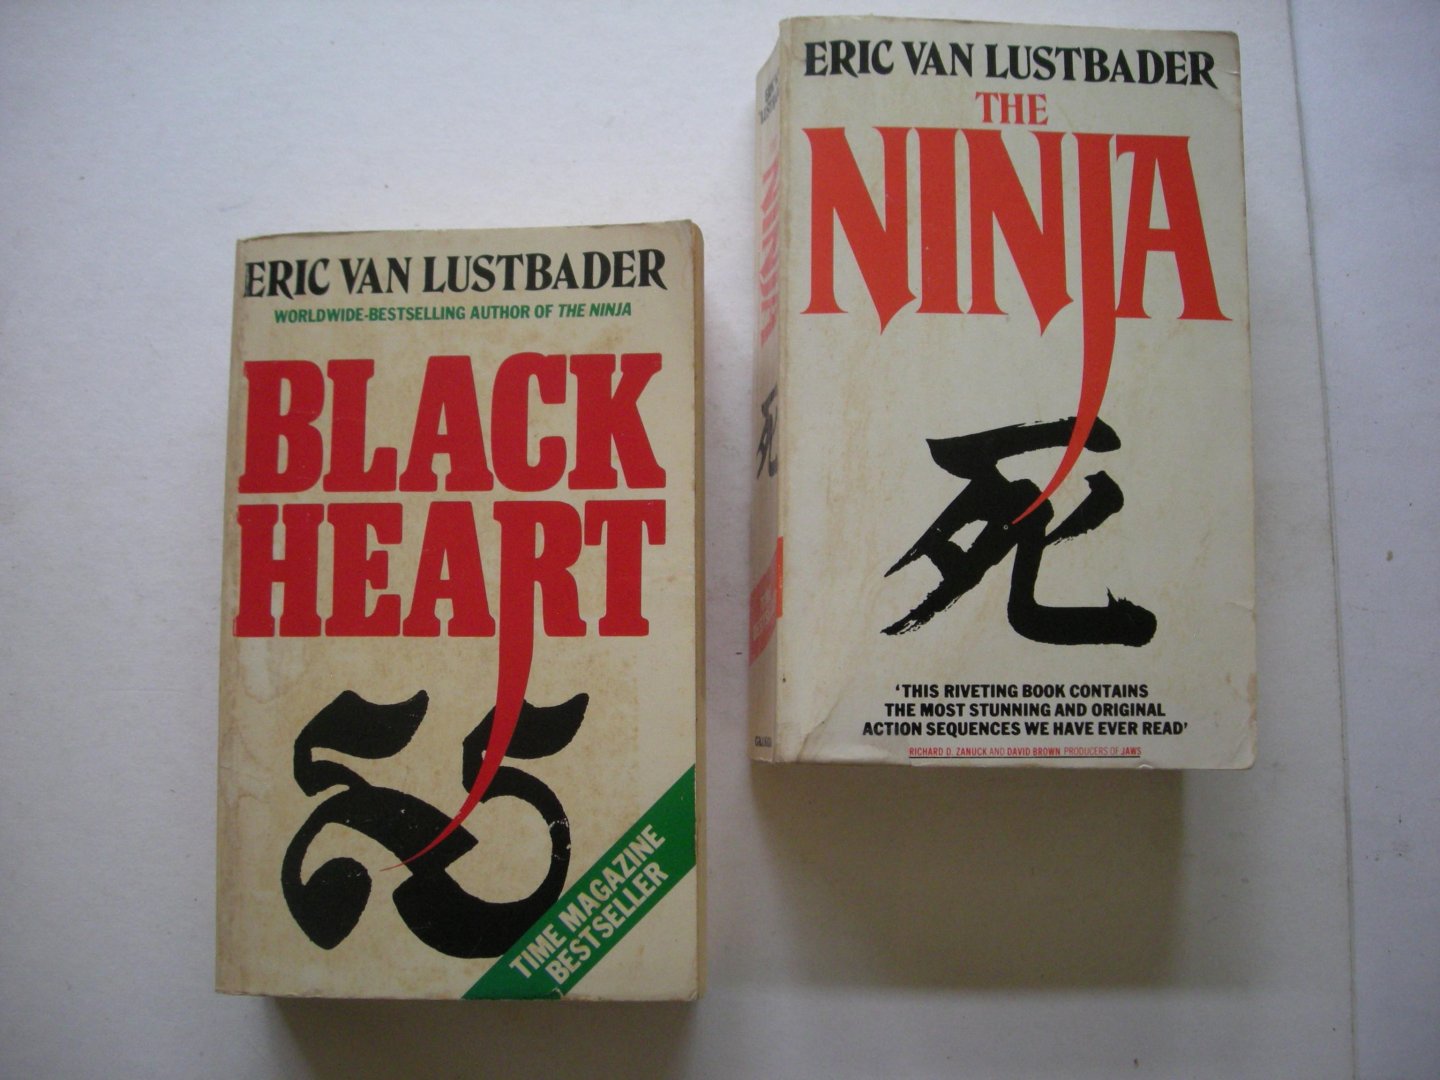 Lustbader, Eric van - The Ninja